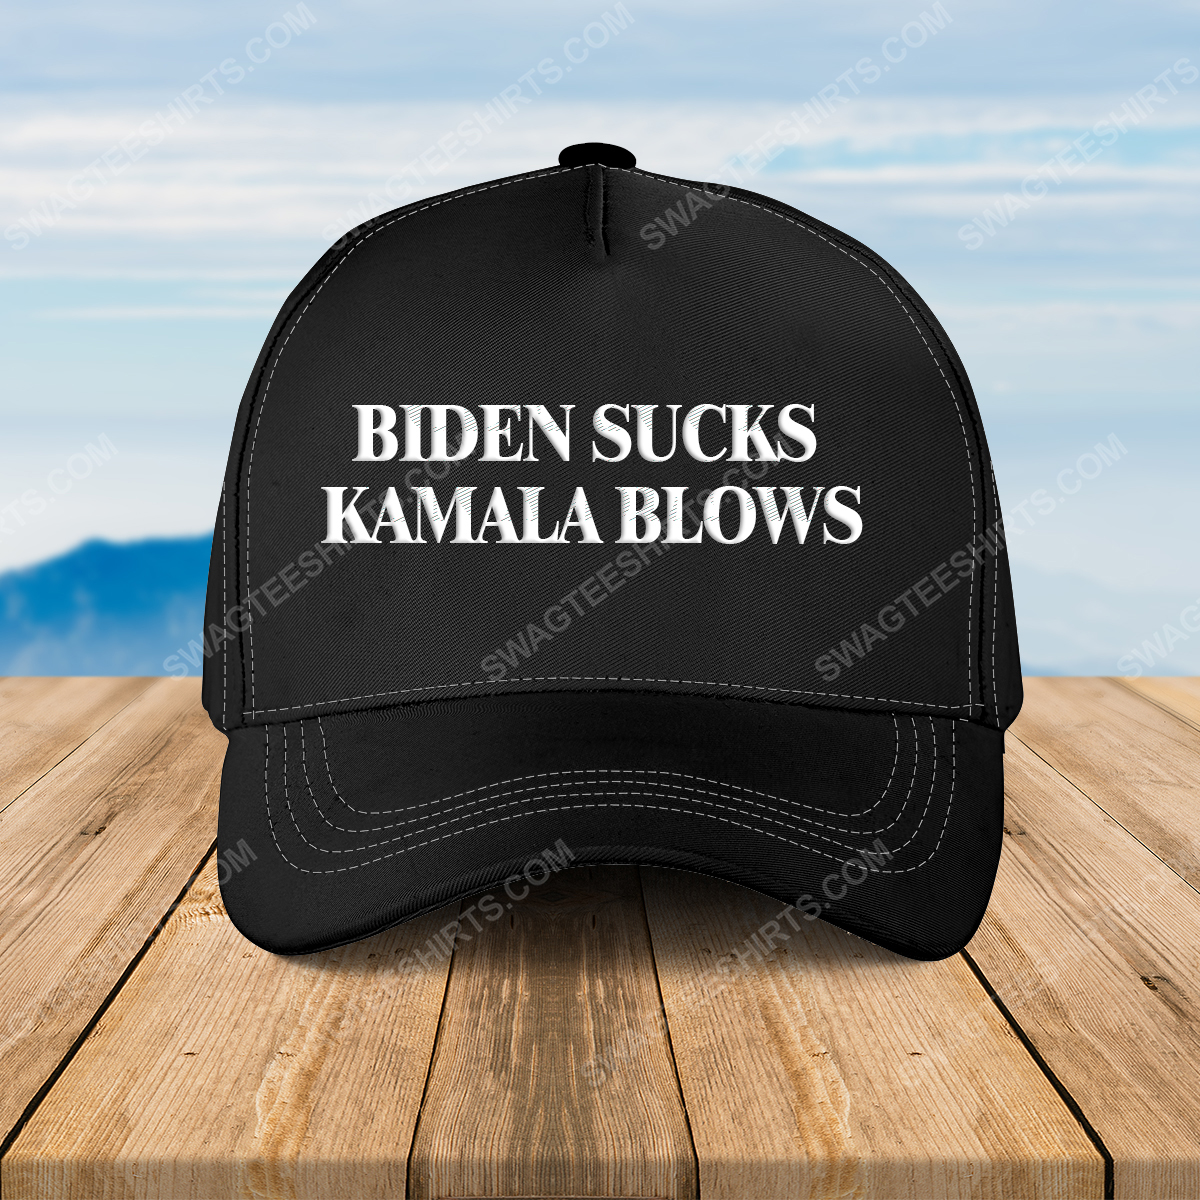 Biden sucks kamala blows full print classic hat 1 - Copy (2)